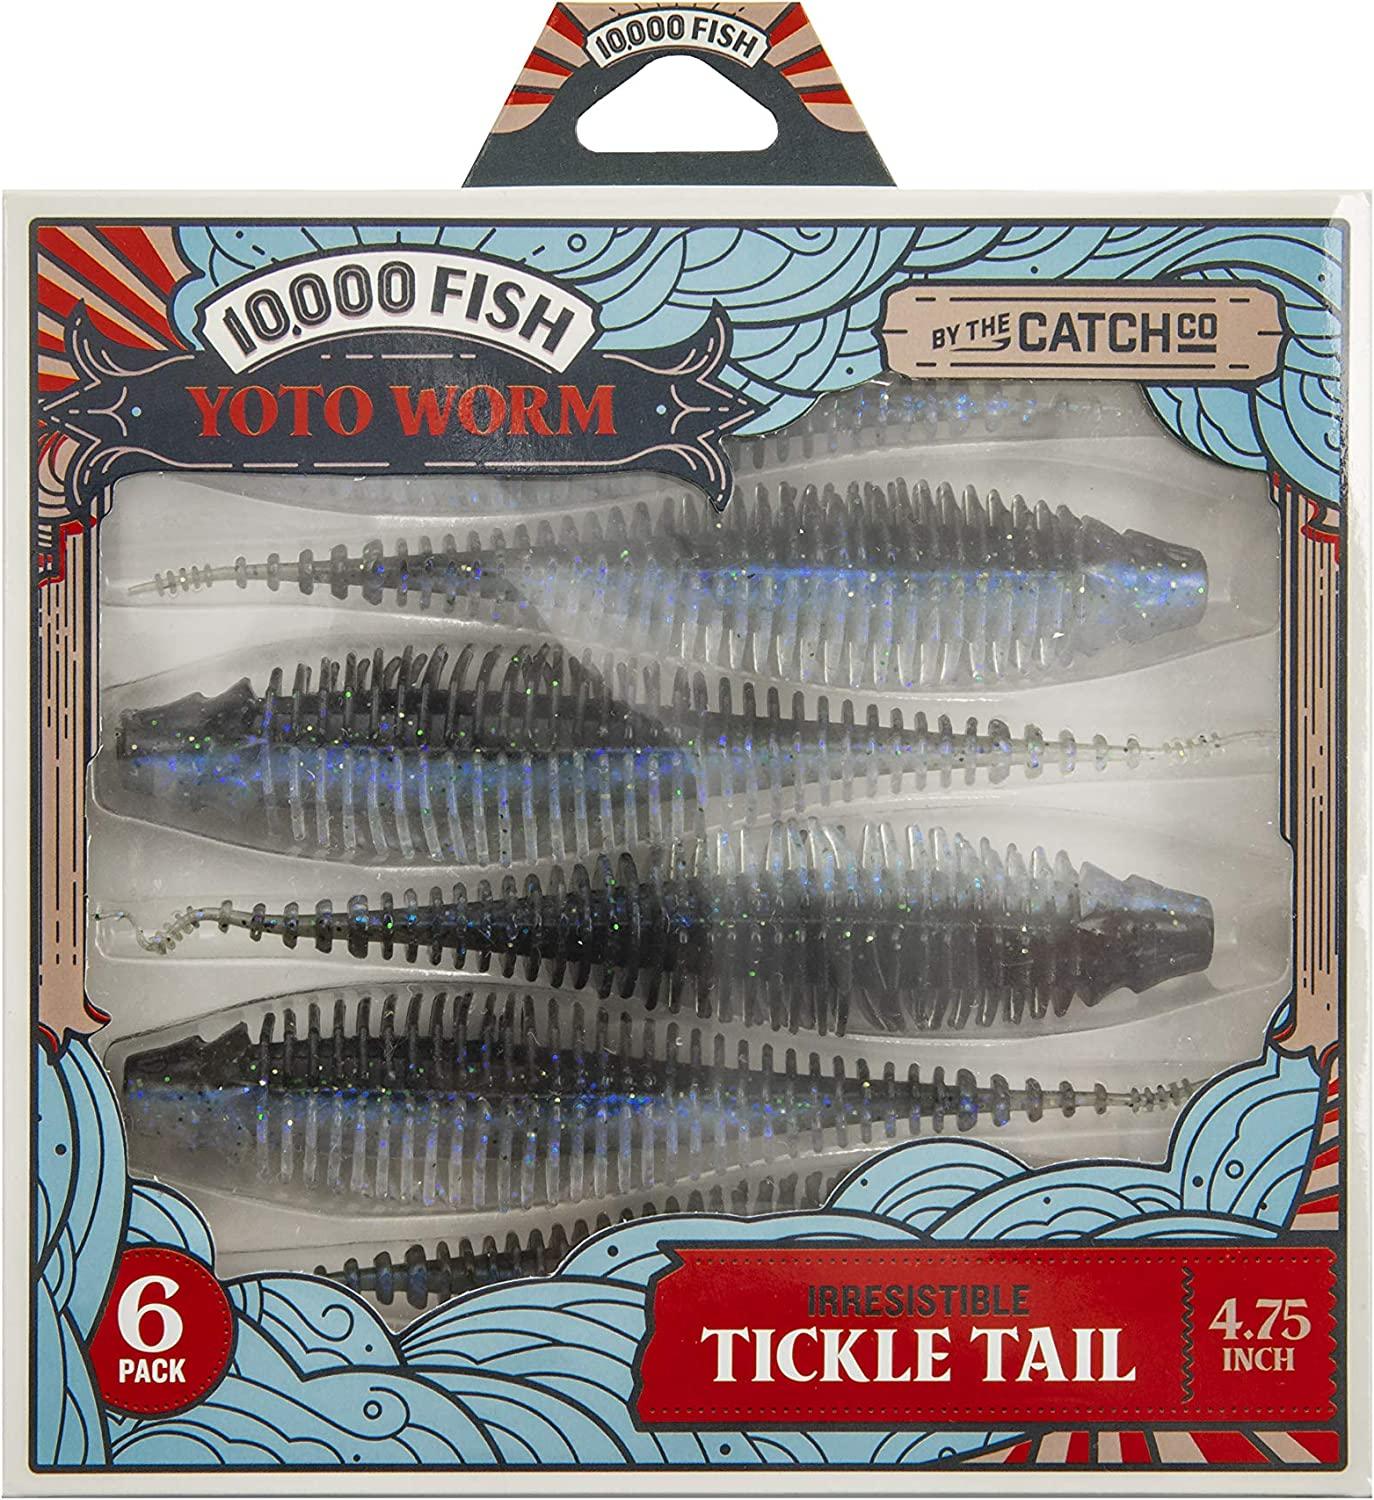 Catch Co 10,000 Fish Yoto Worm Soft Plastic Creature Bait Fishing Lure  Black & Blue Flake 4.75